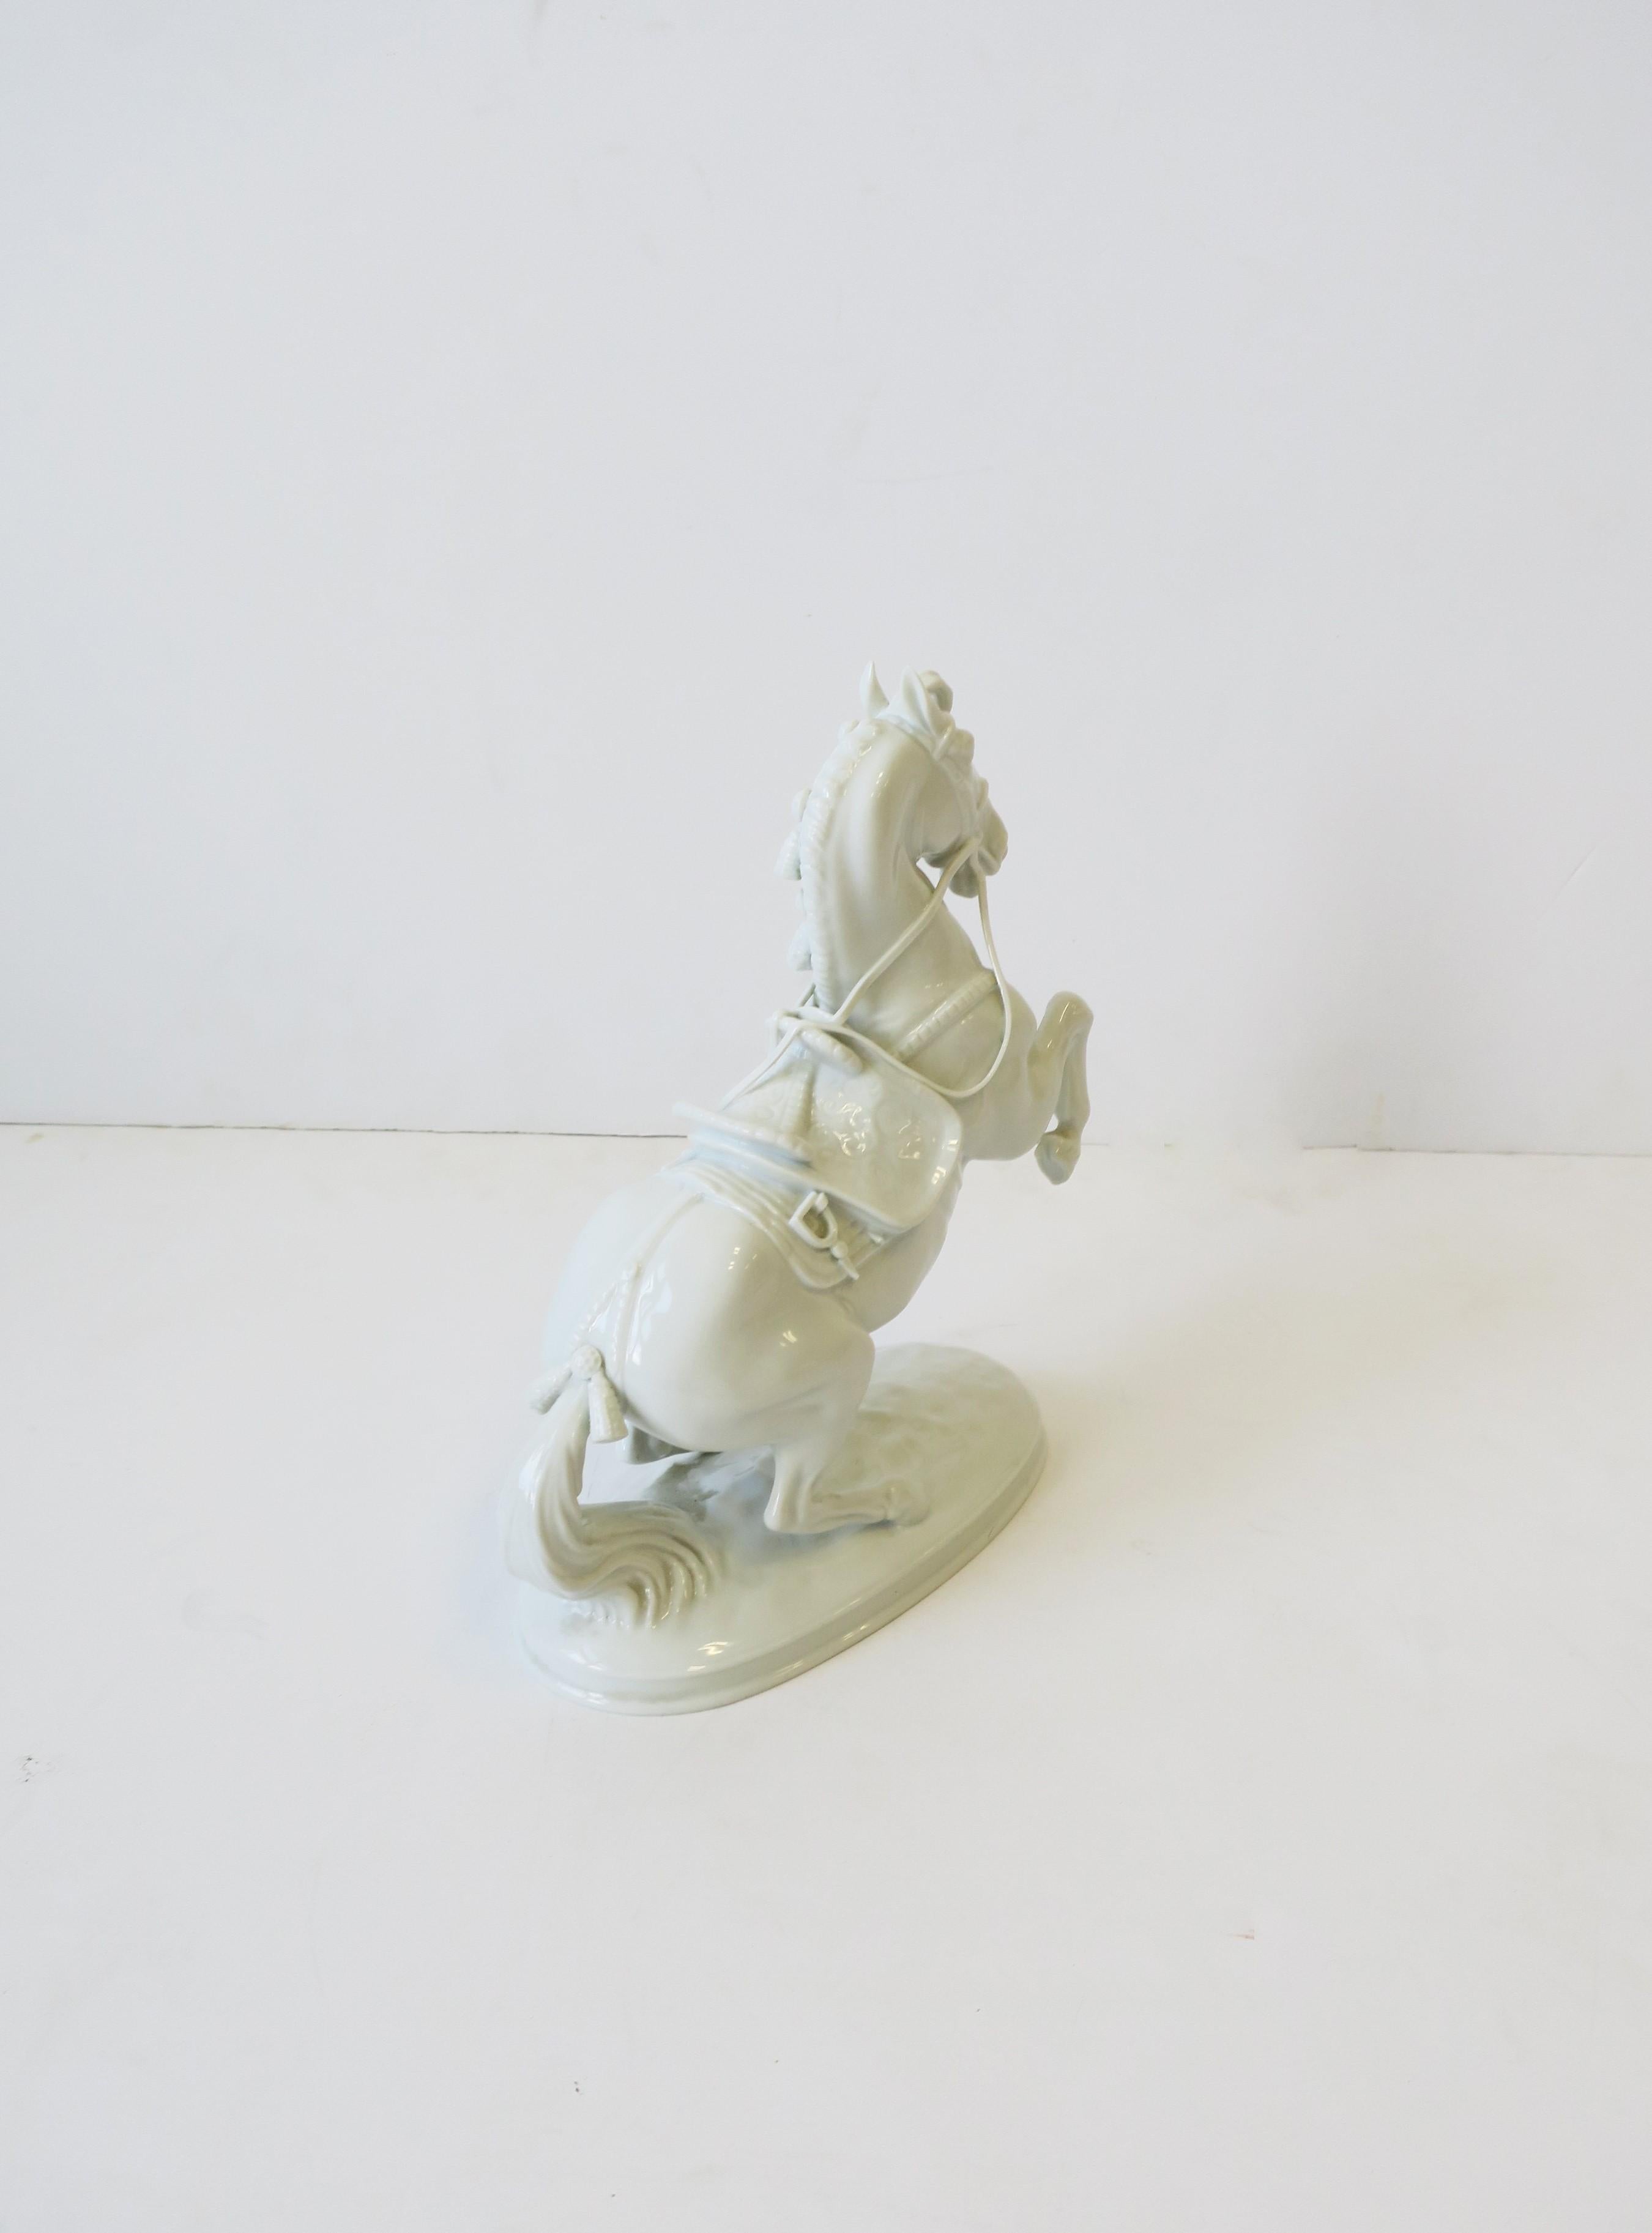 White Porcelain Equine Horse Sculpture Decorative Object from Austria  5